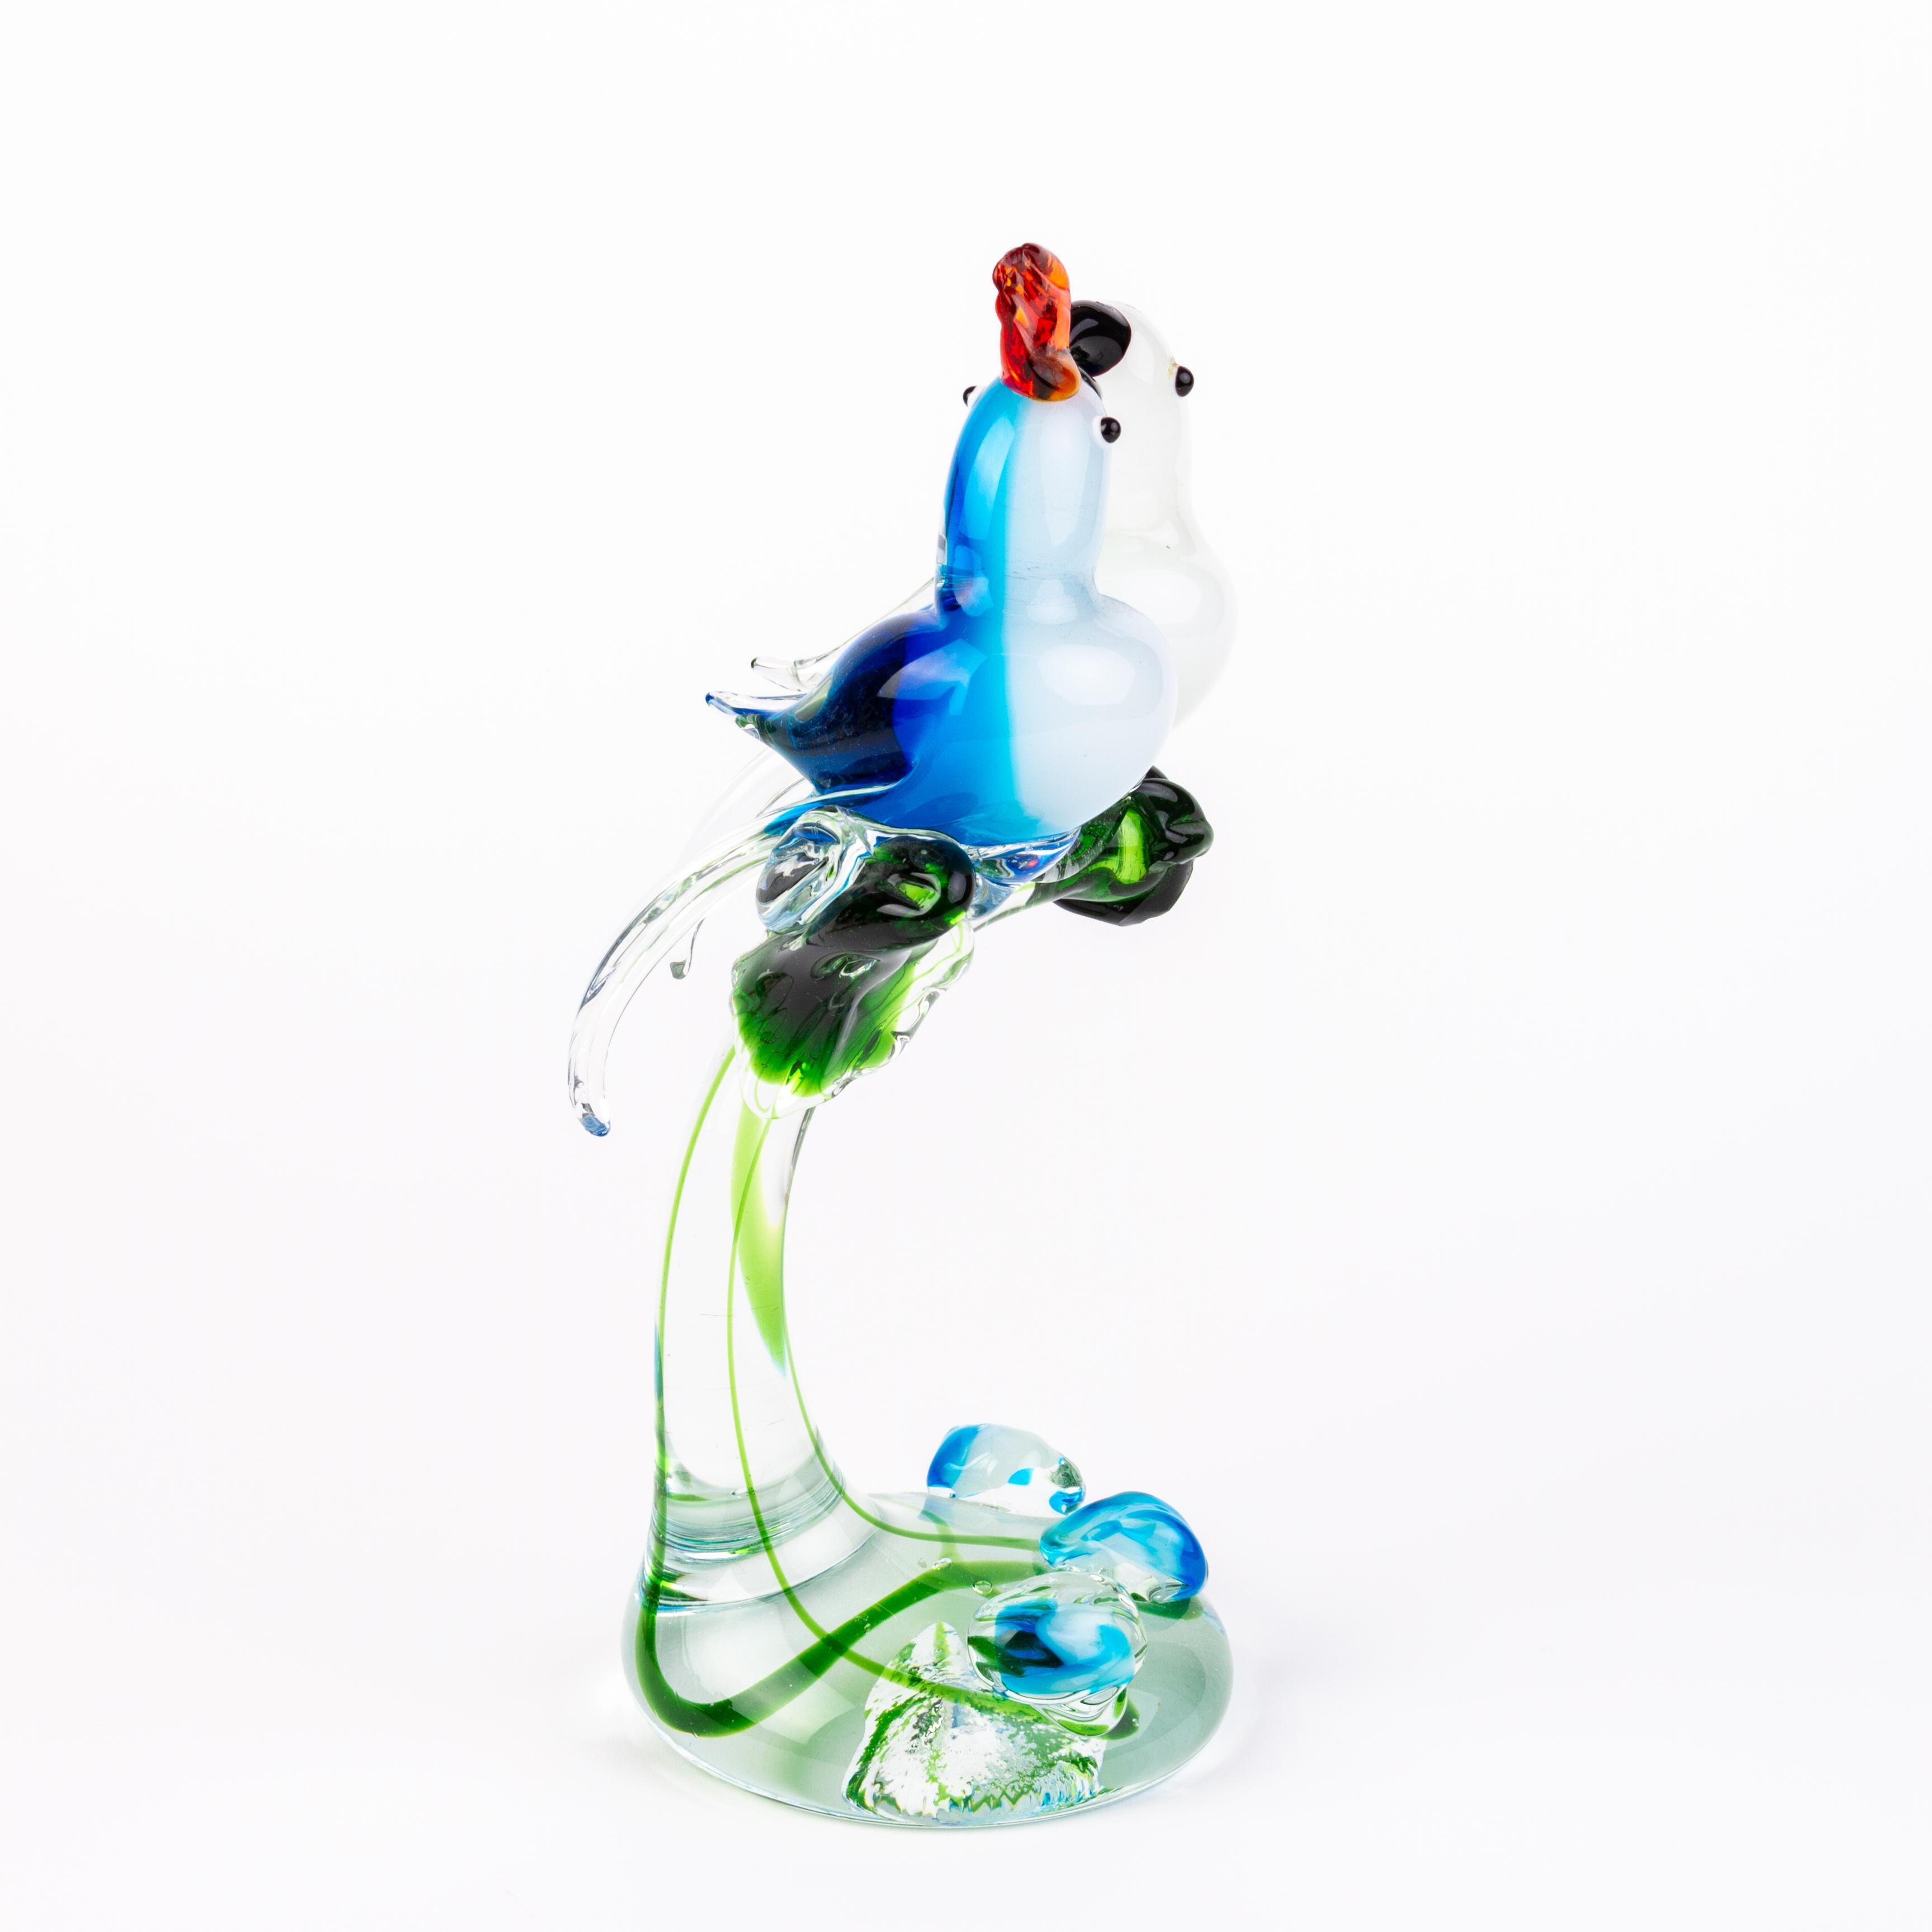 Murano Venetian Glass Sculpture of Birds
Good condition.
Free international shipping.